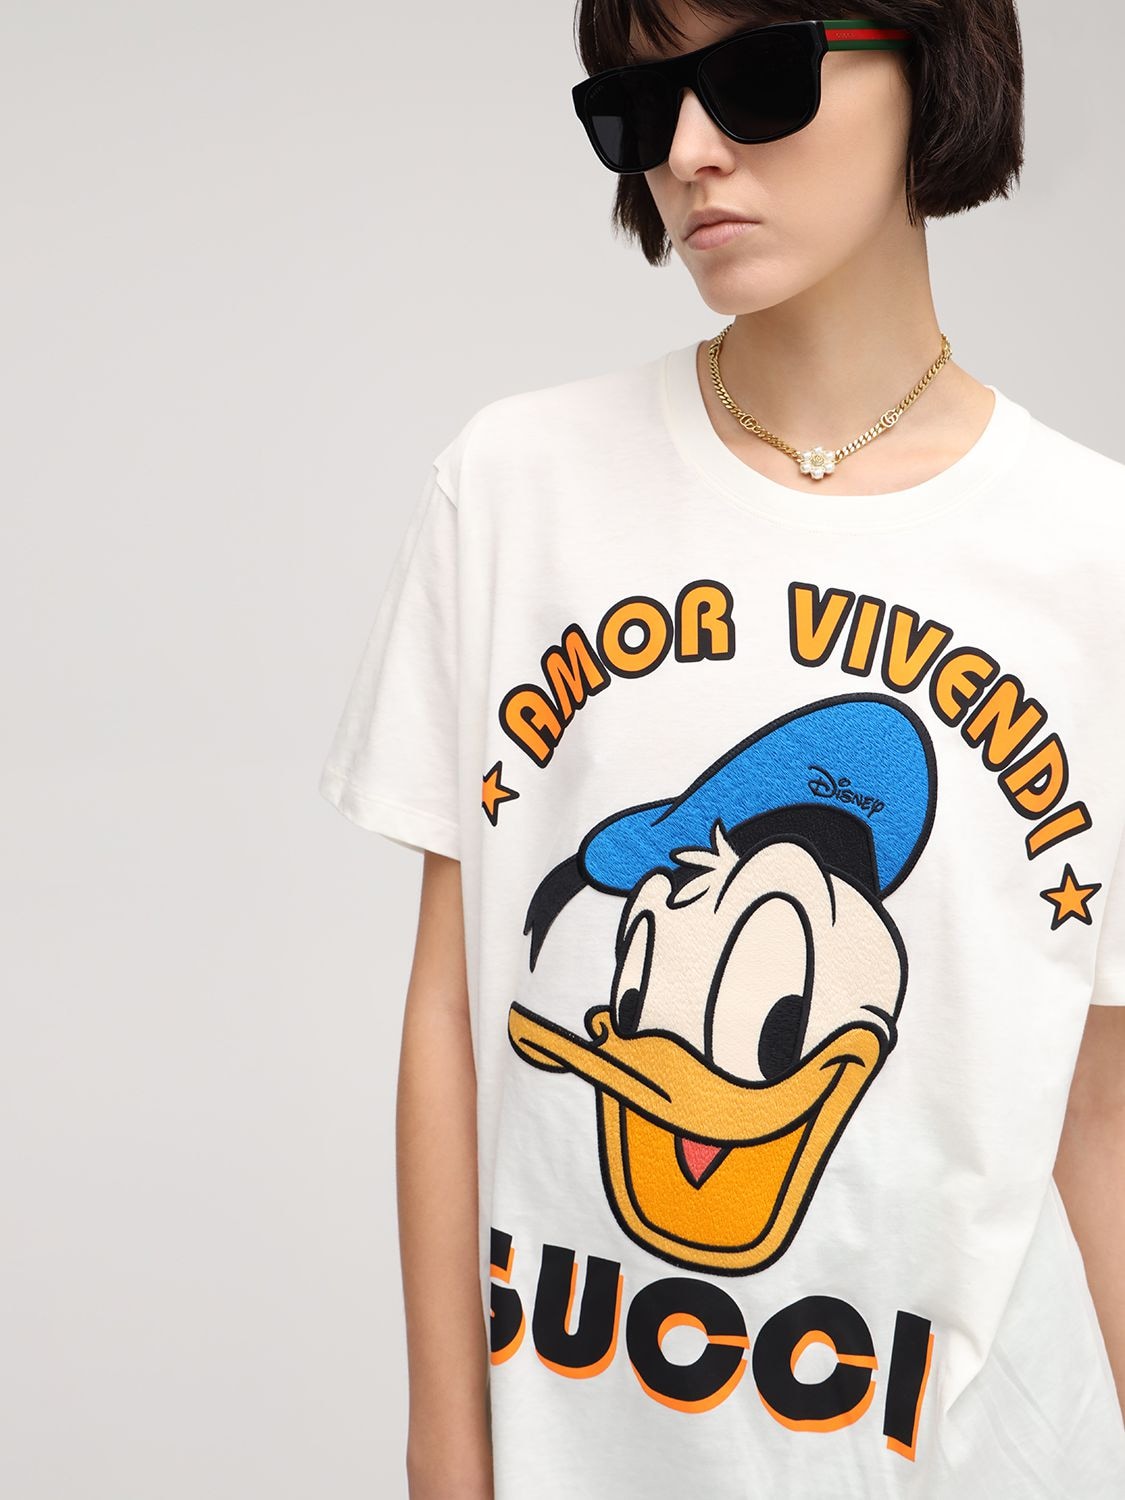 Gucci Donald Duck Amor Vivendi Gucci shirt - Dalatshirt